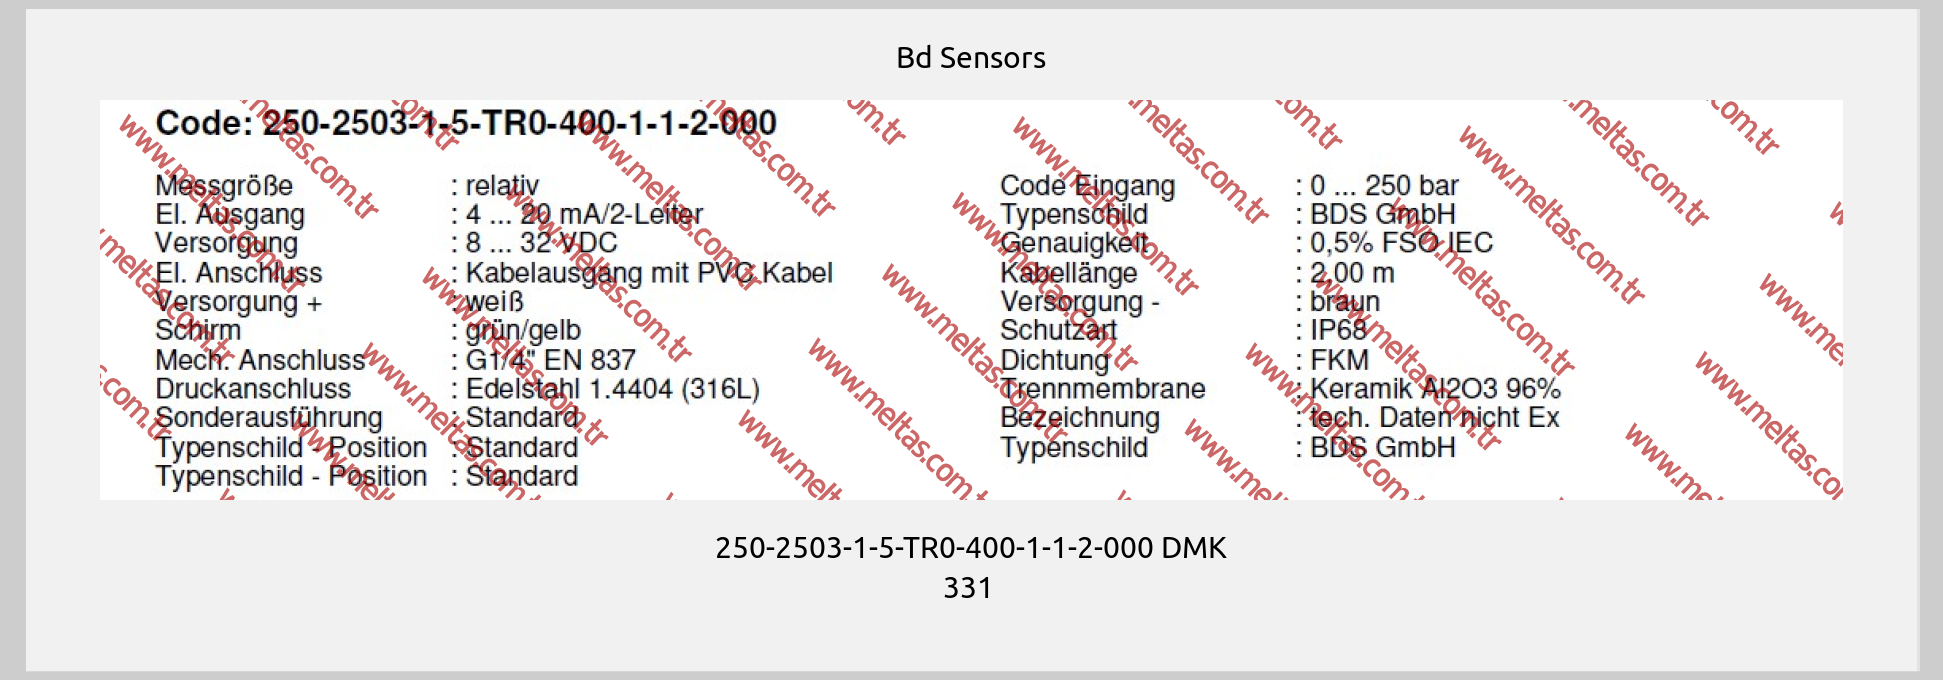 Bd Sensors-250-2503-1-5-TR0-400-1-1-2-000 DMK 331 